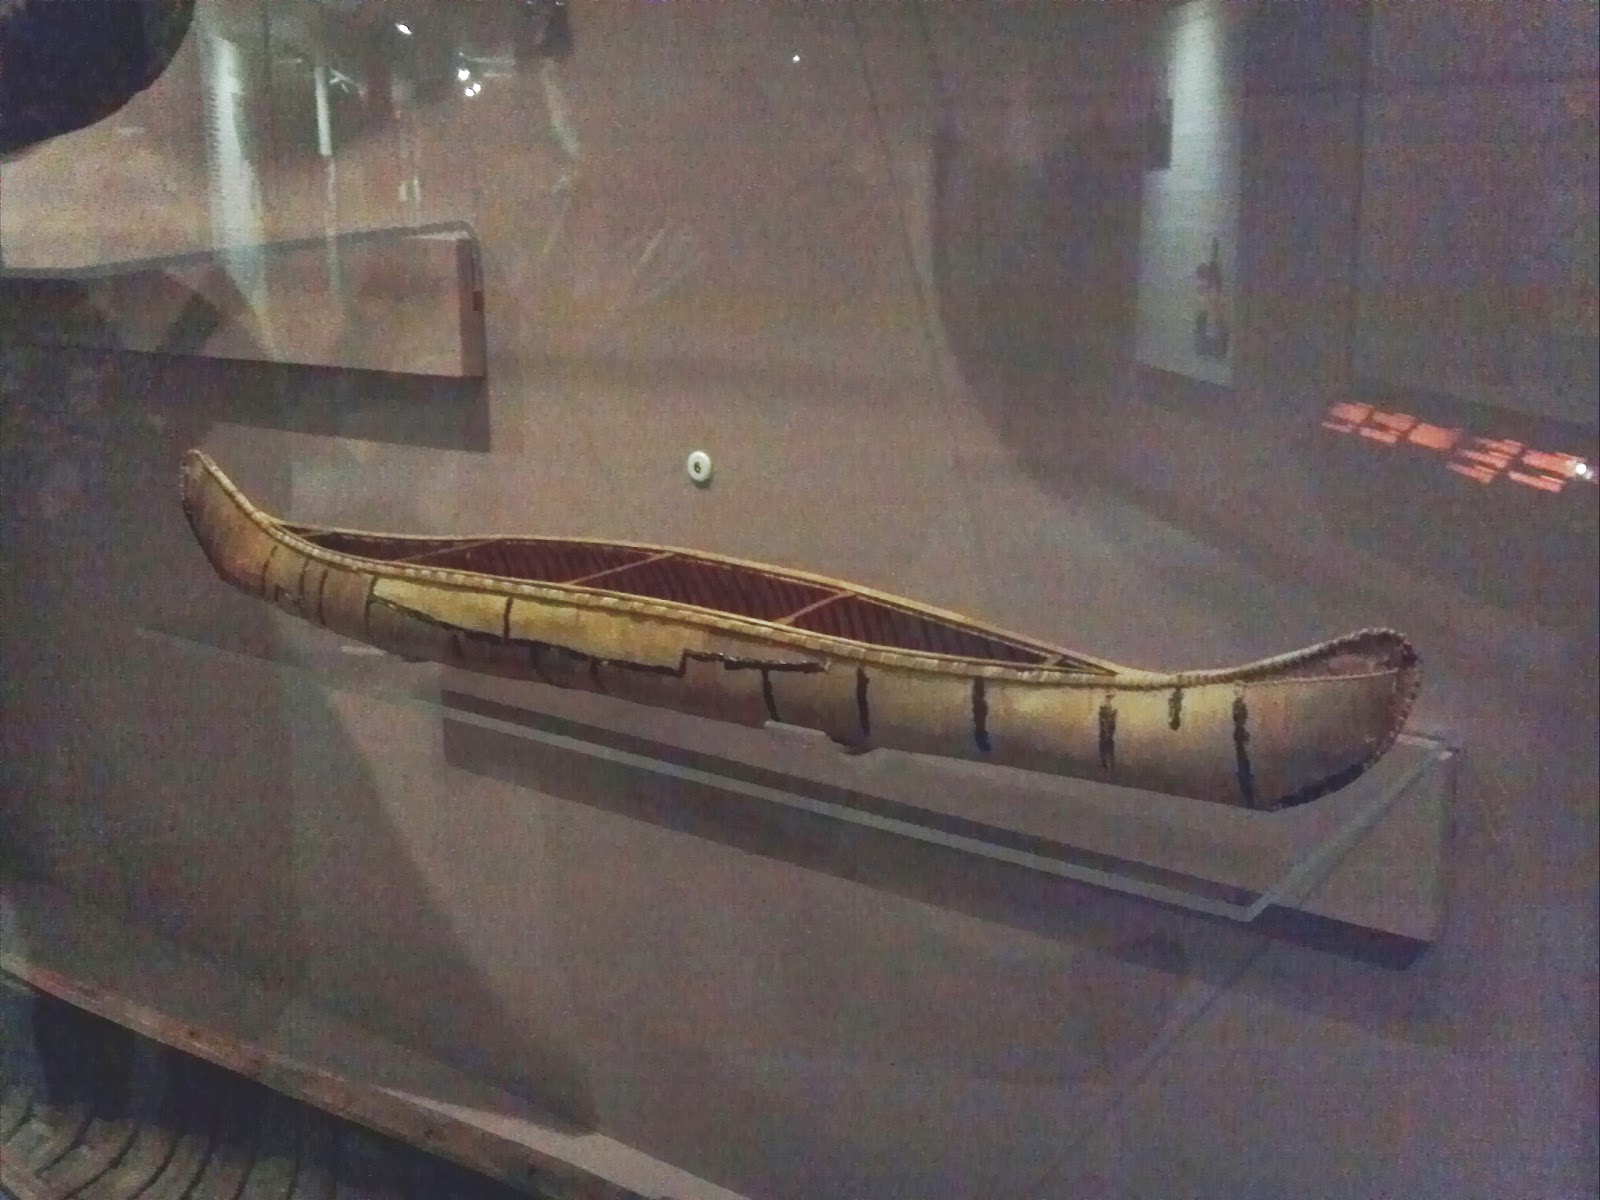 Micmac canoe model